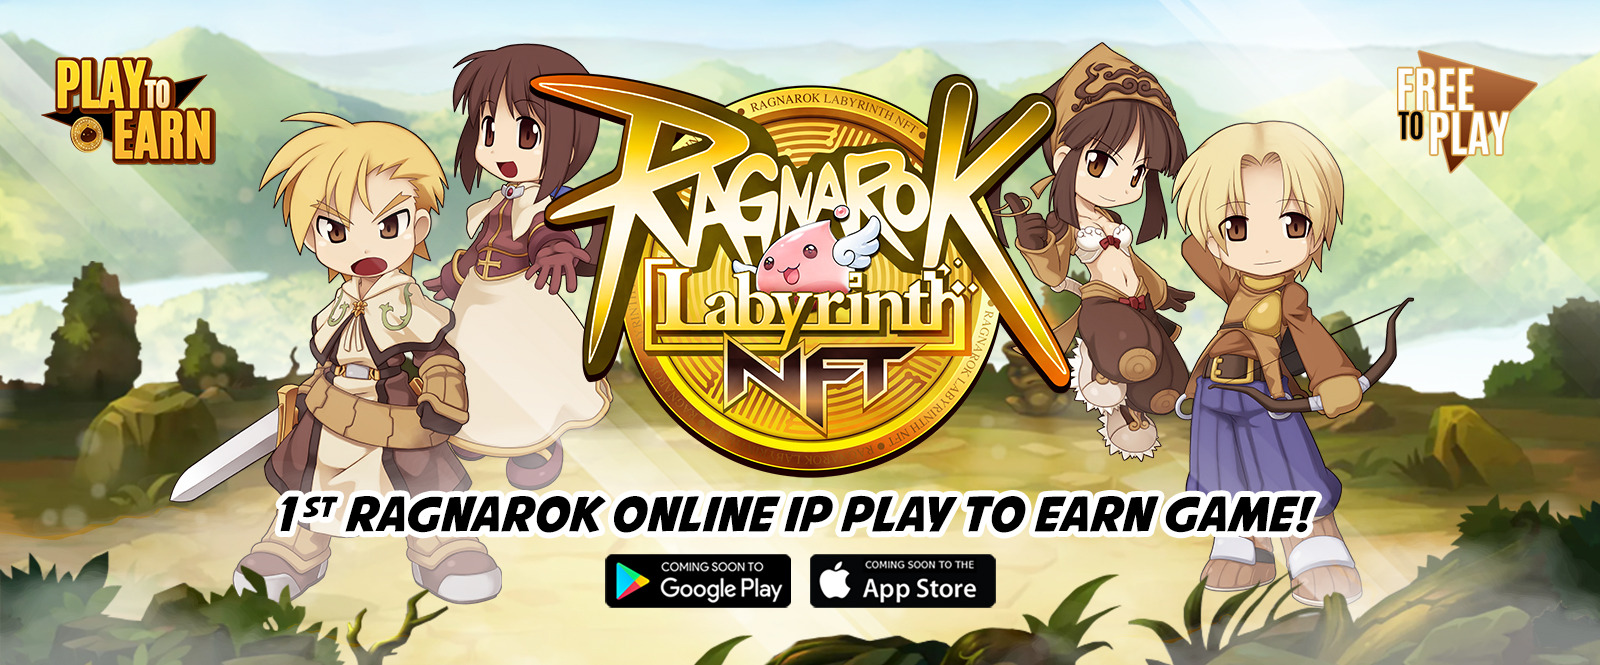 Ragnarok Labyrinth NFT-IP Ragnarok Online Resmi Pertama dengan Elemen Play To Earn dan NFT